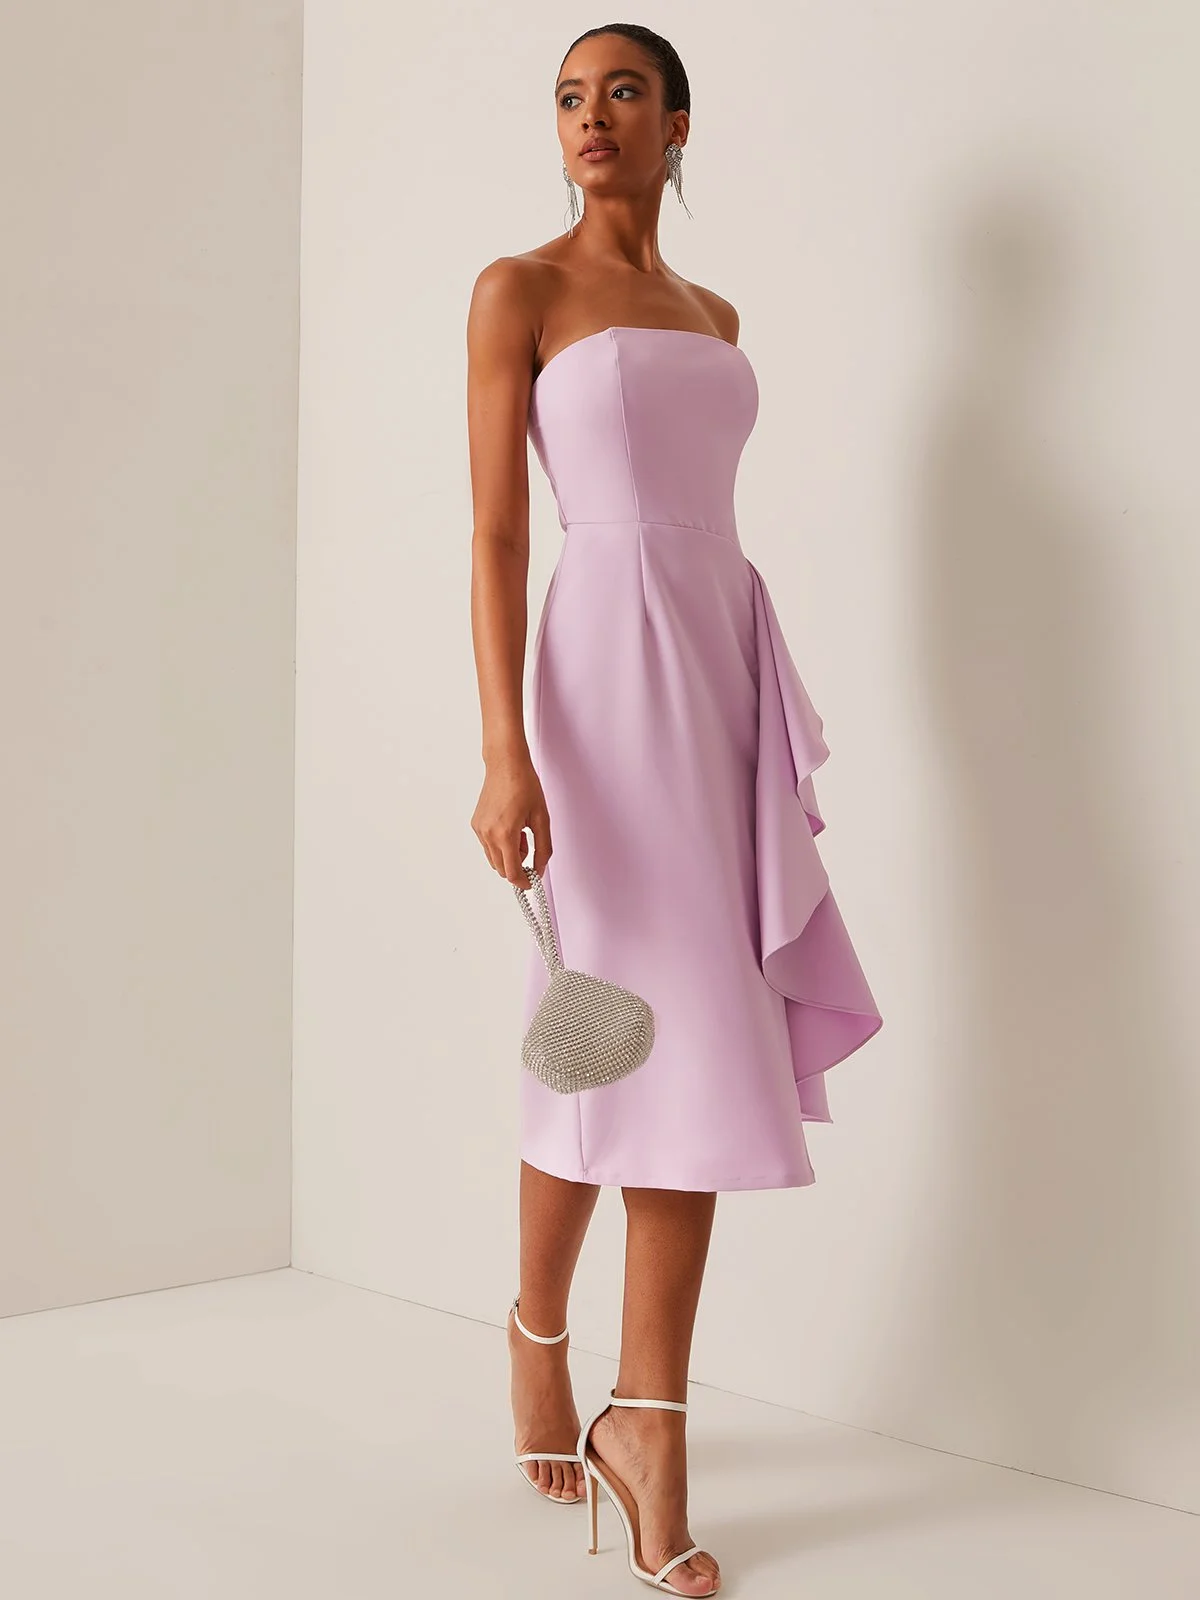 Strapless Sleeveless Midi Dress with Waist Flounce for Date